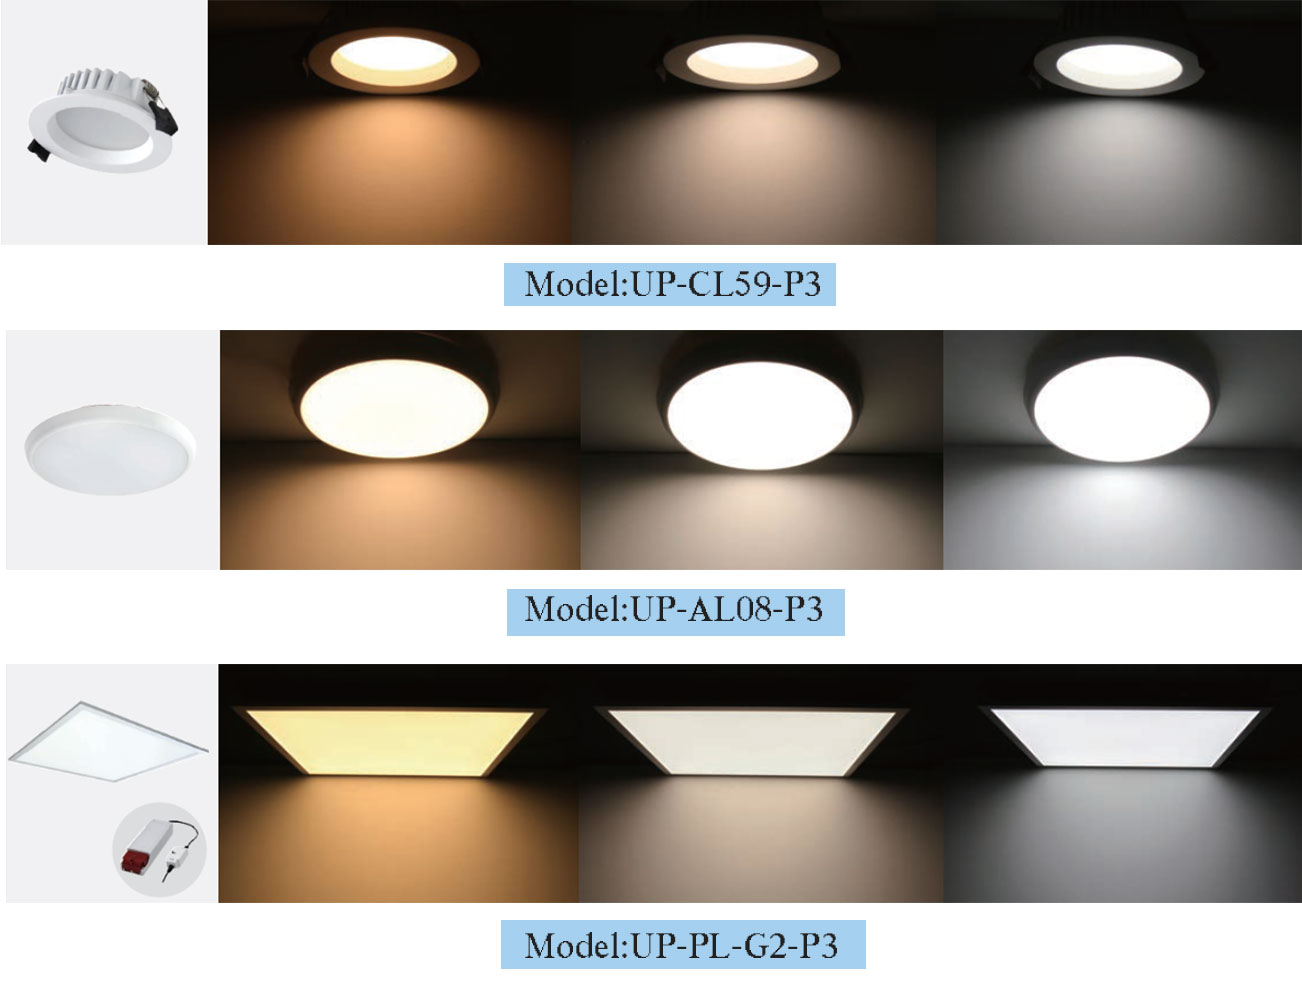 https://www.upshine.com/files/products/blog/UPSHINE-Color-Changing-LED-Lighting-Fixtures.jpg